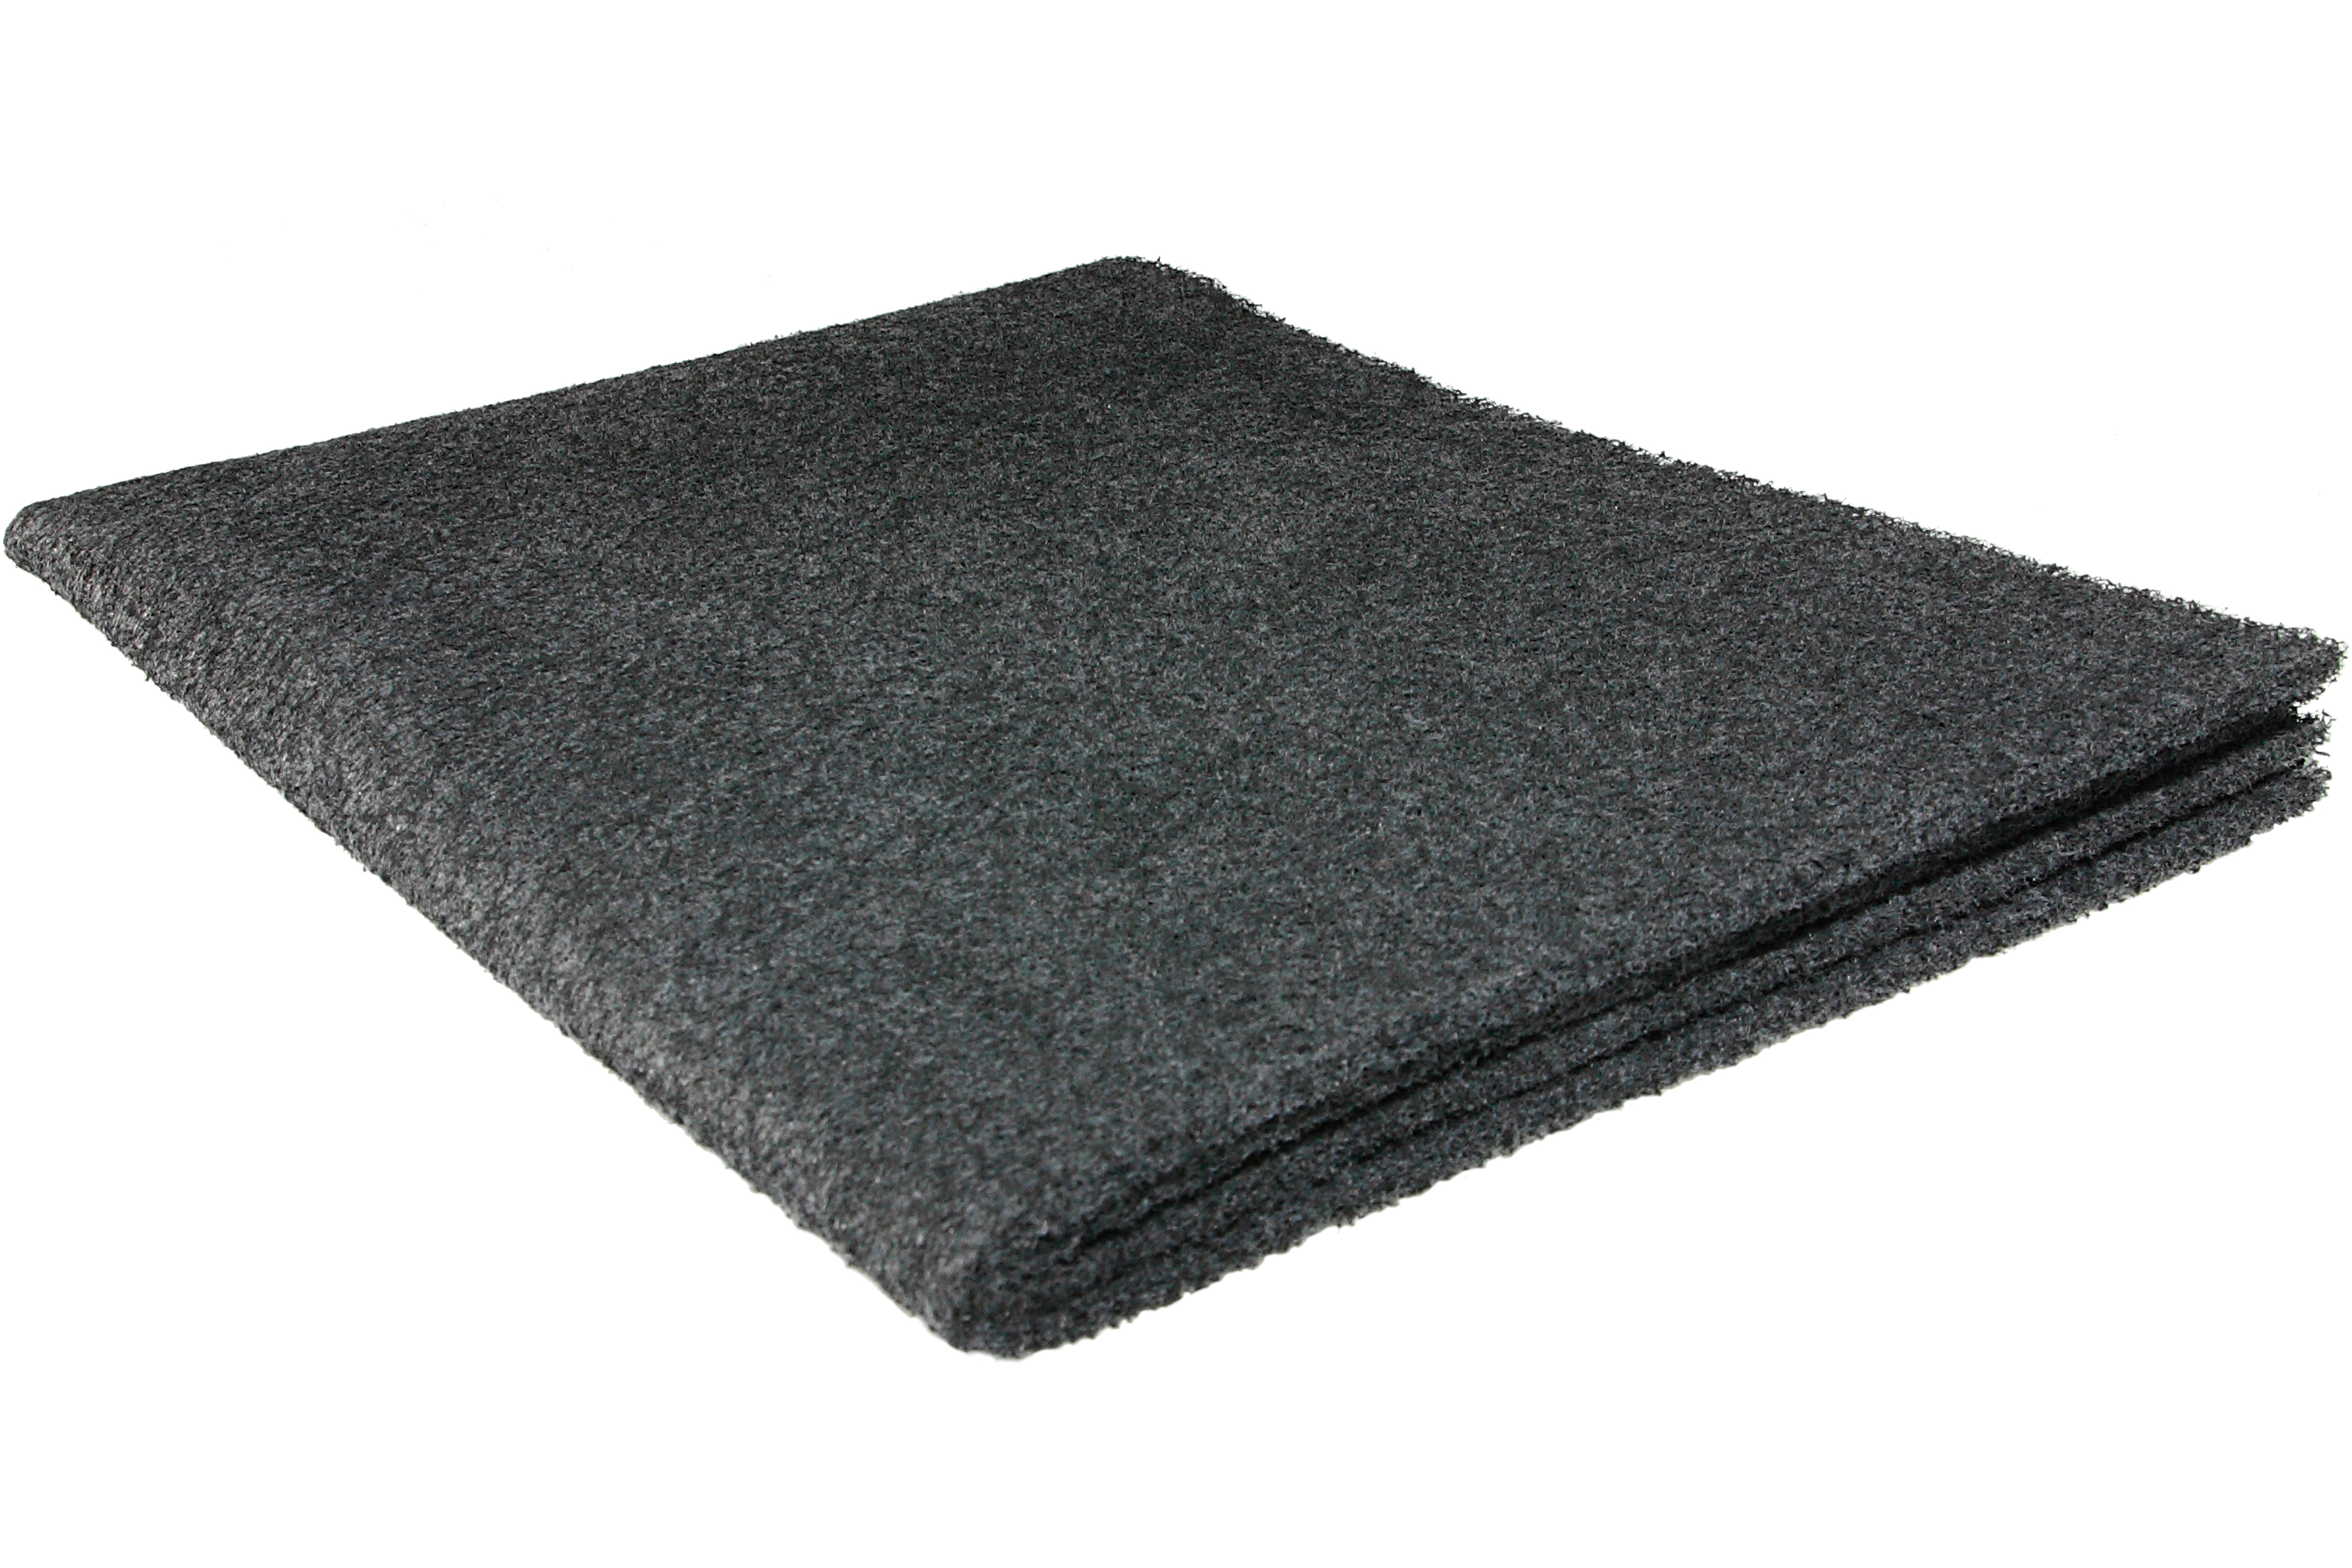 respekta activated carbon filter charcoal filter mat cooker hood set of 2 pieces